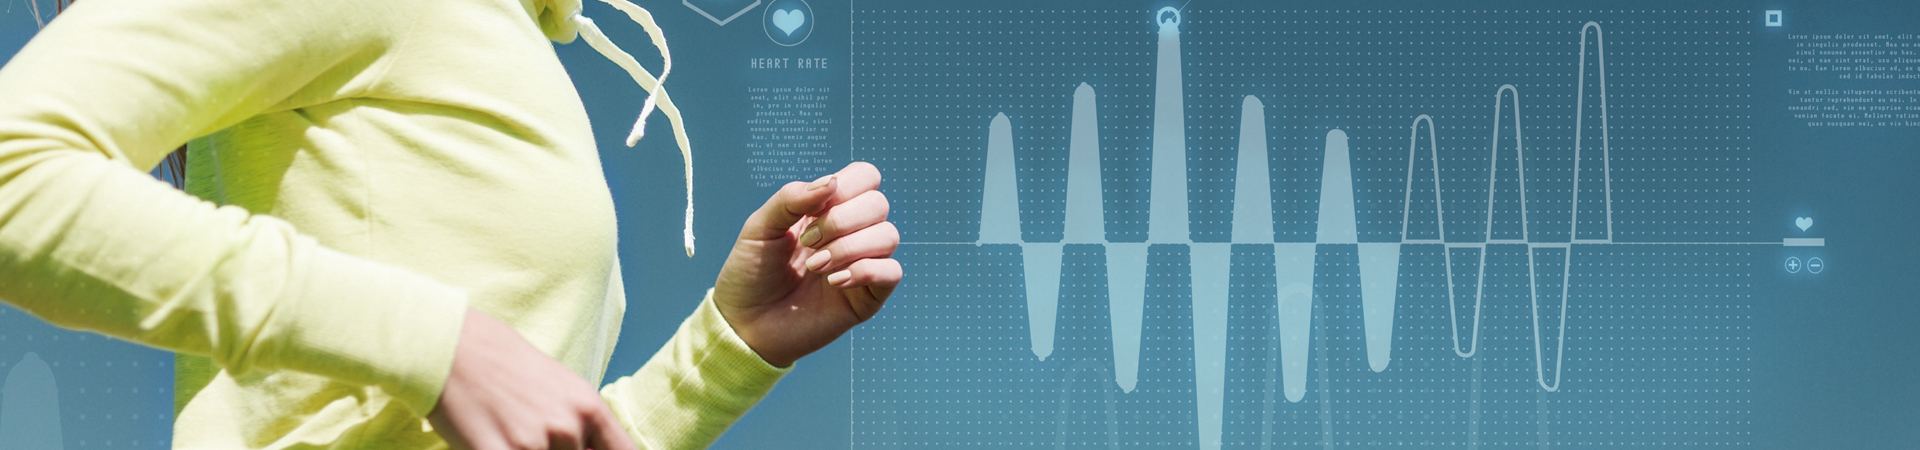 Mobile Heart Rate Tracking App Development